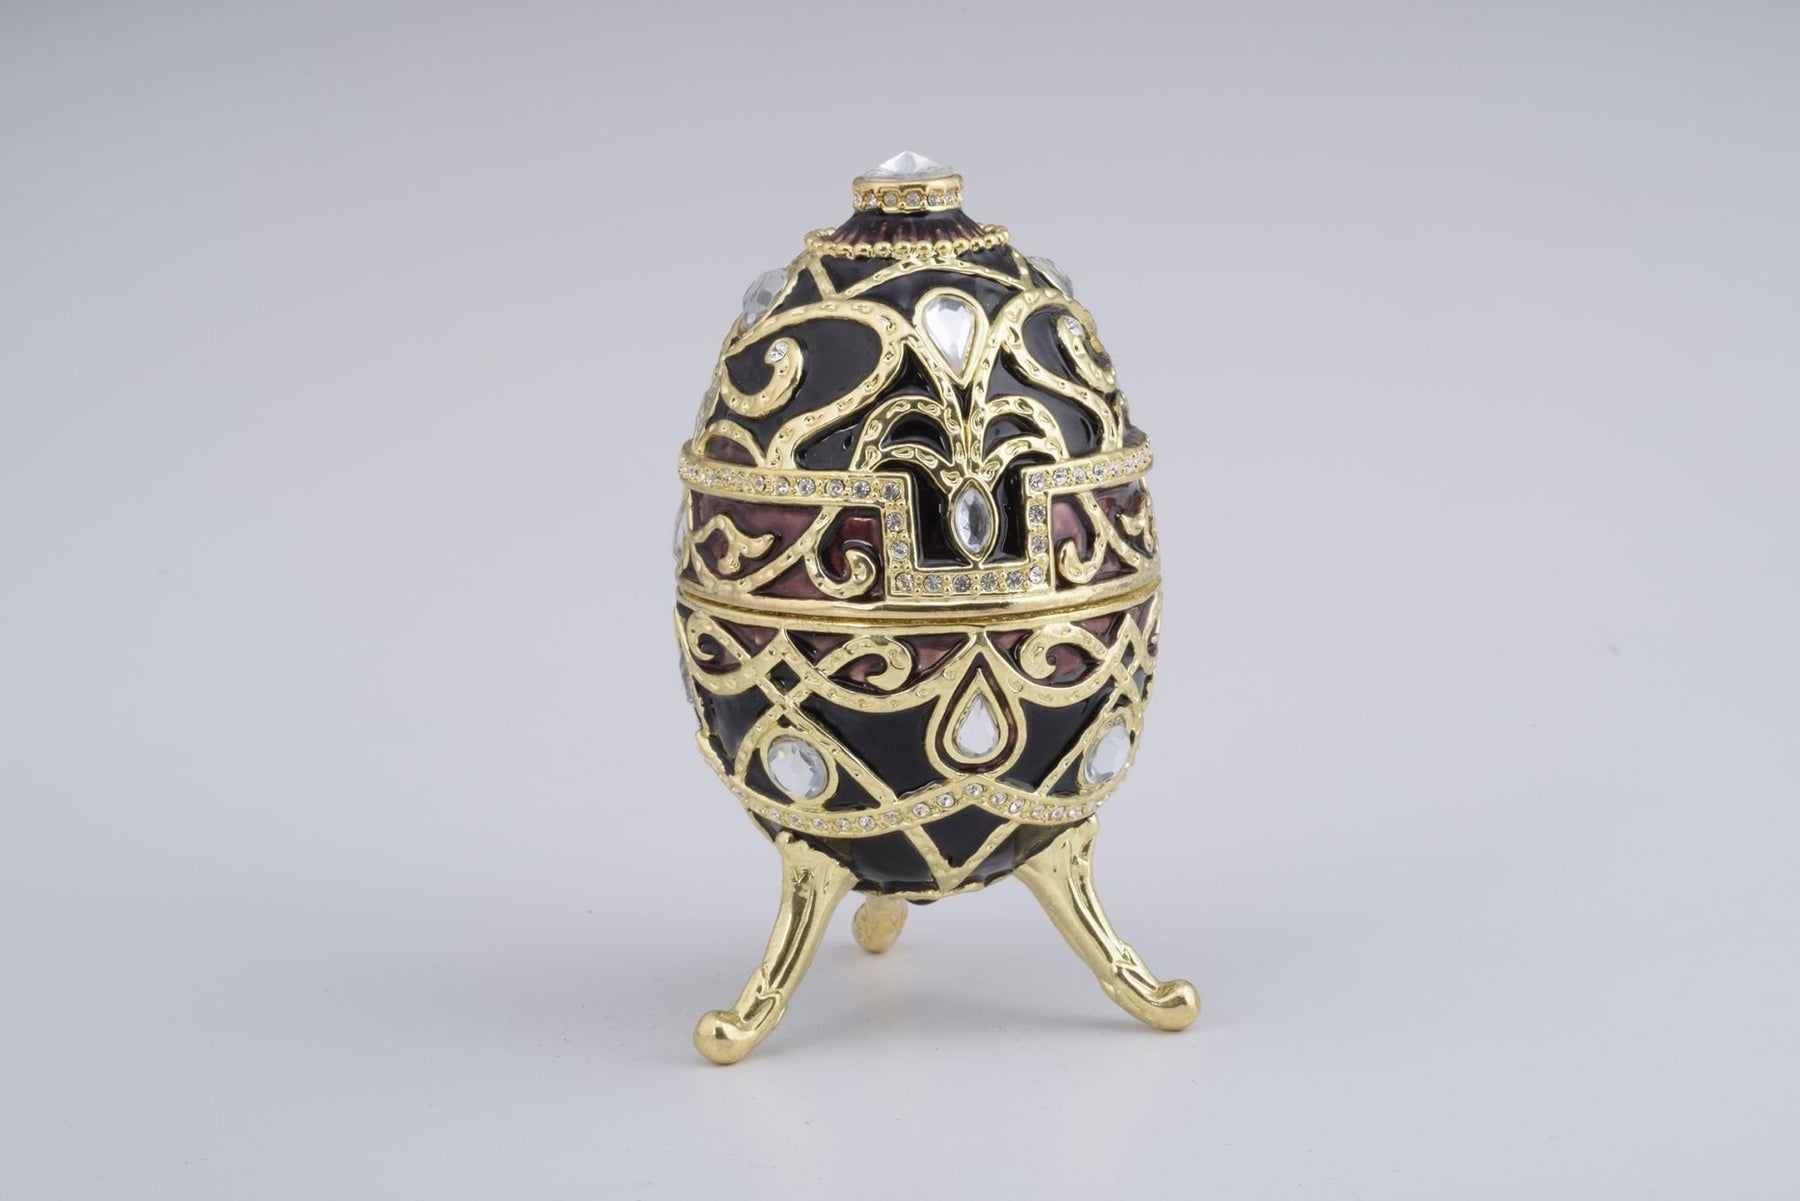 Keren Kopal Gold & Black Faberge Style Egg  94.50